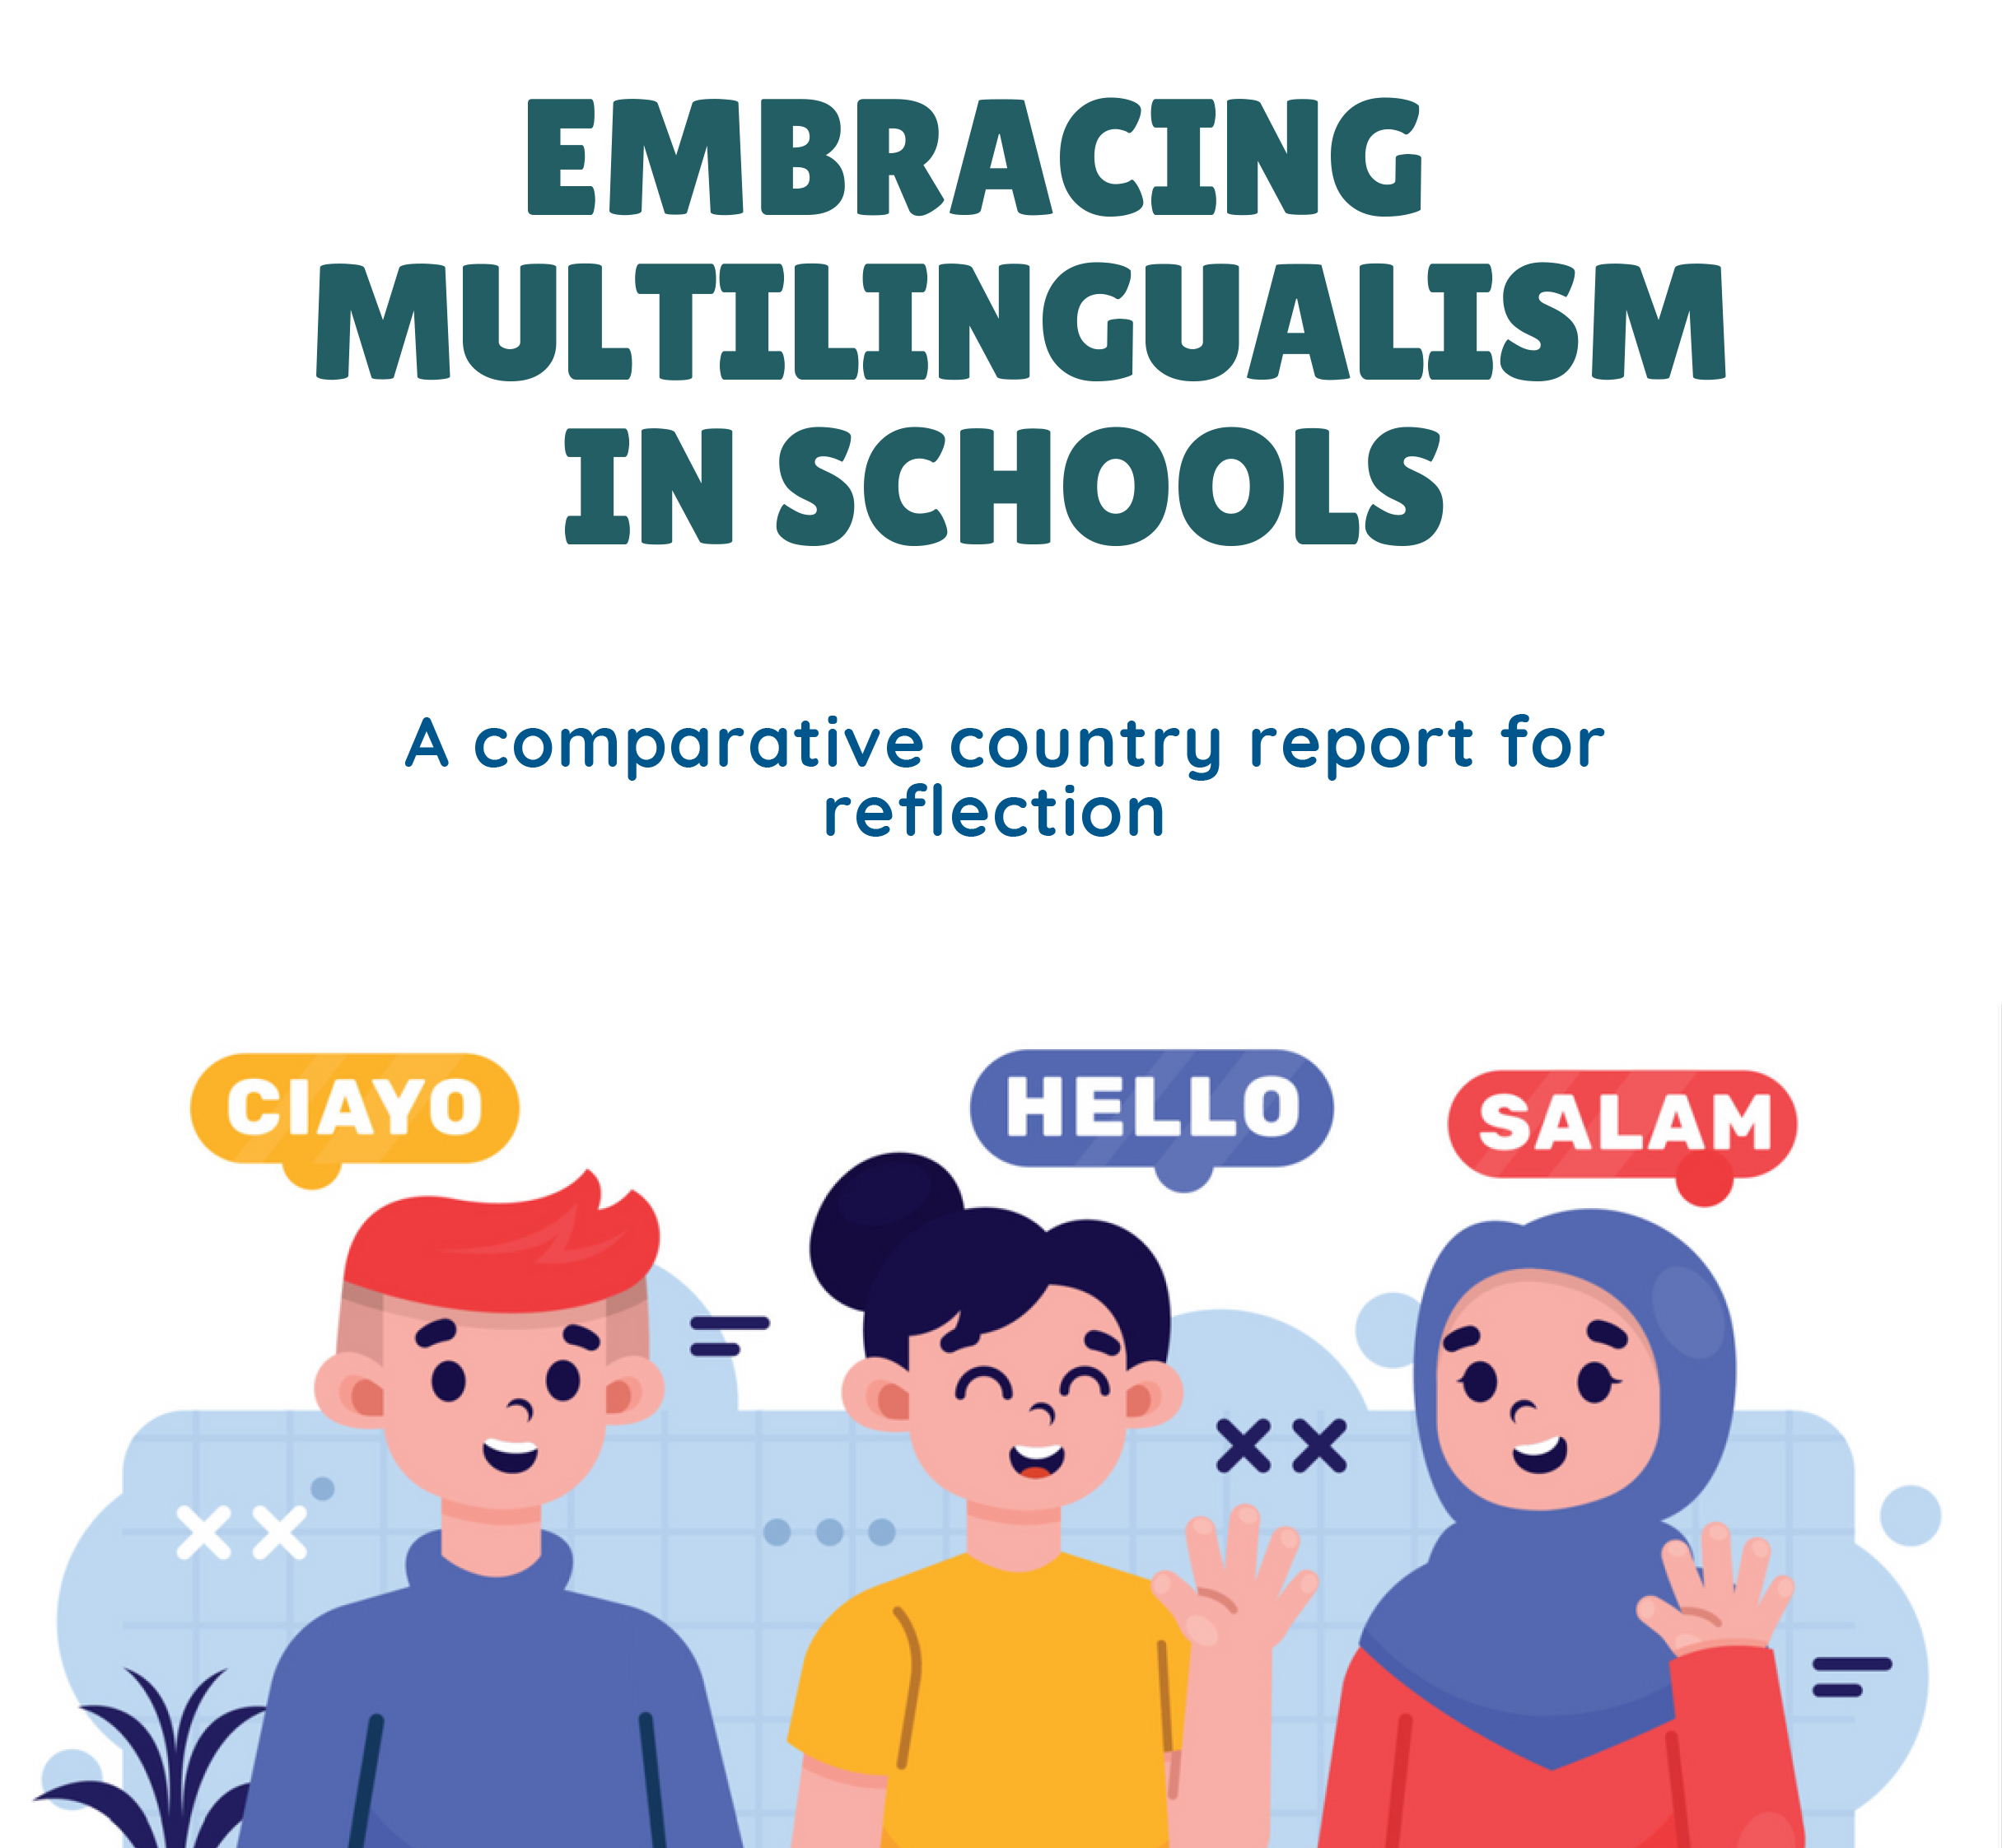 Embrace Multilingualism in Schools!